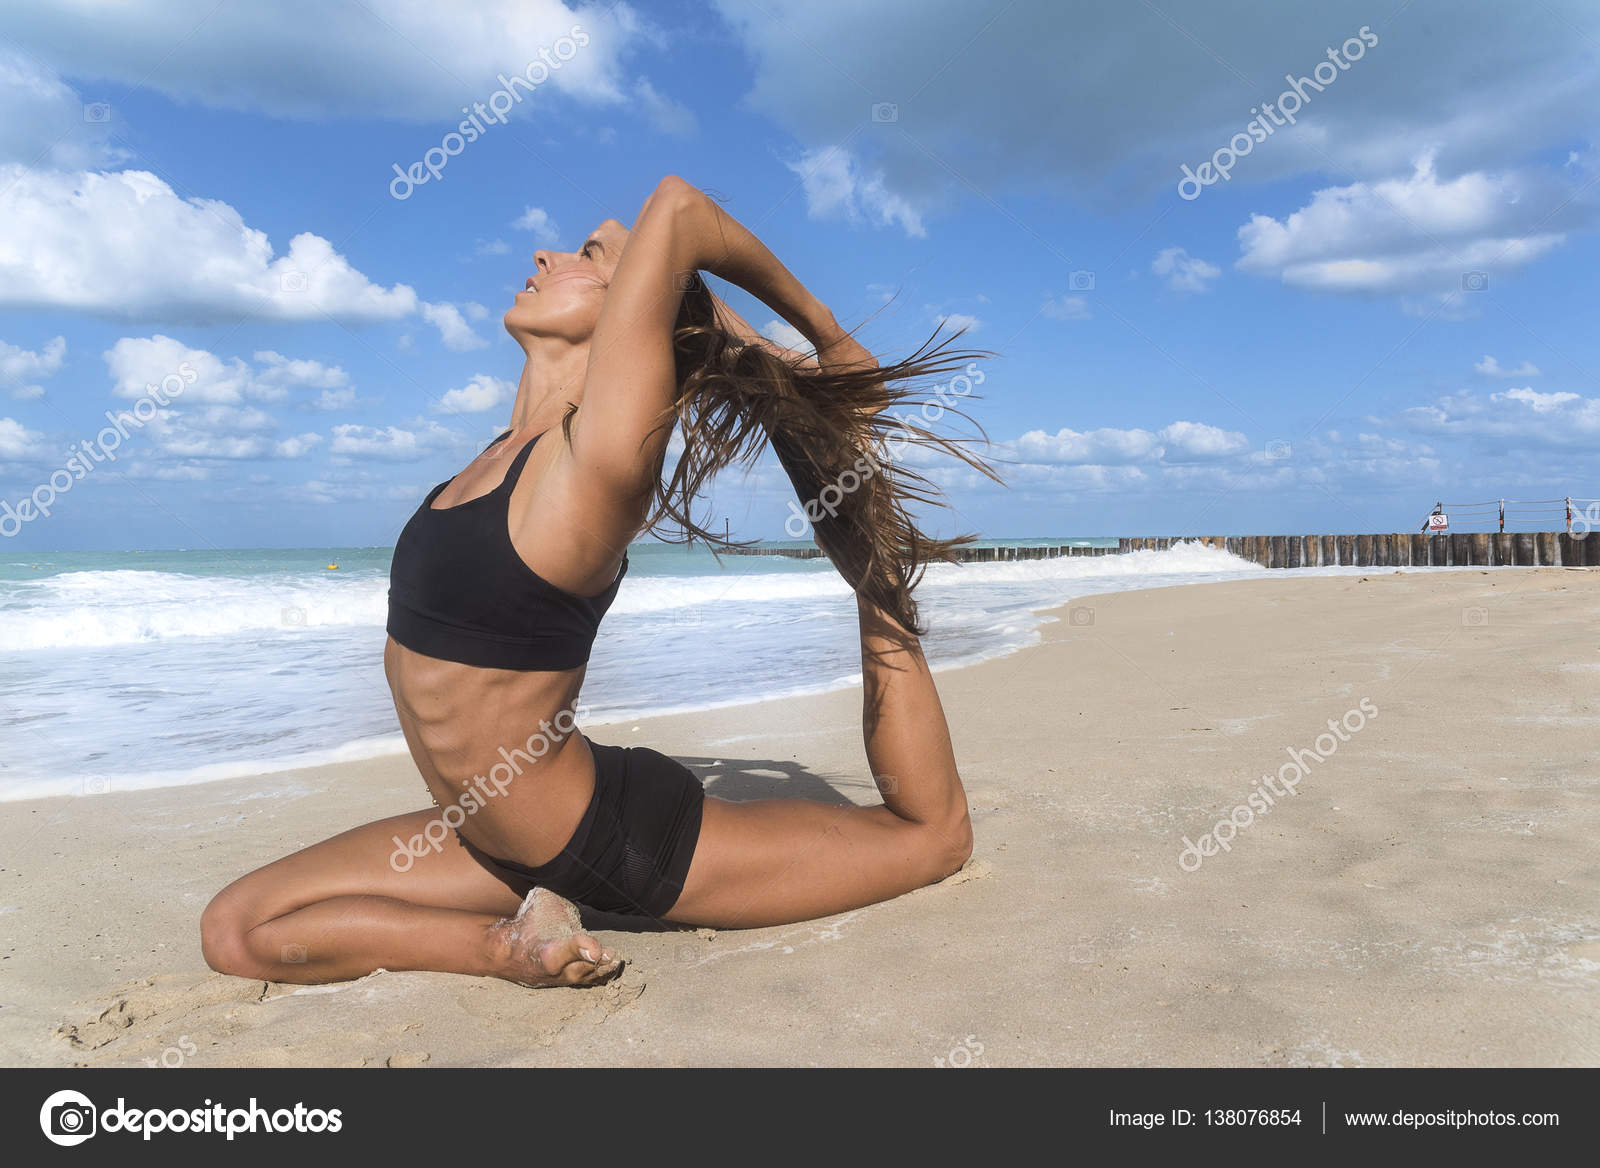 White European girl in a yoga pose on beach with black tight